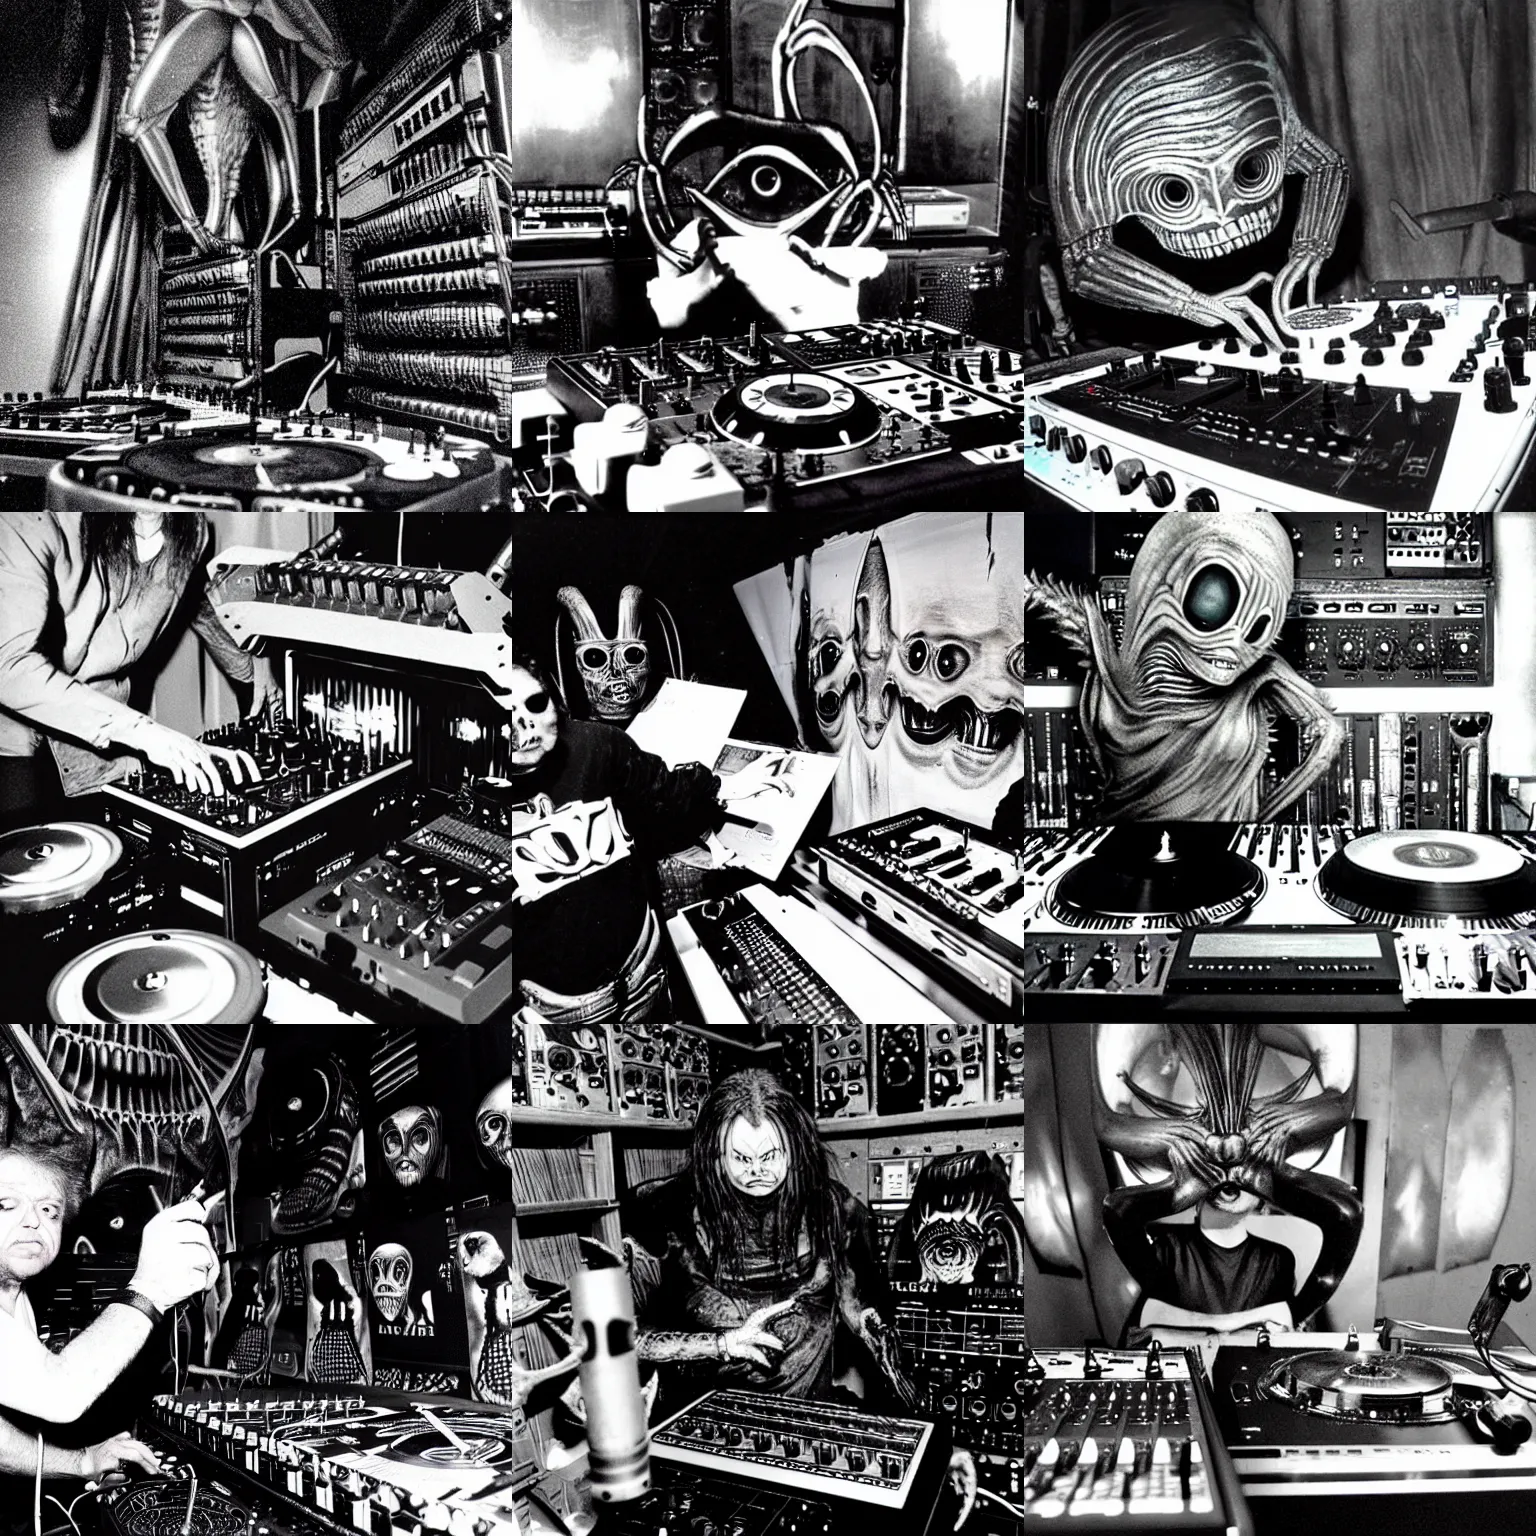 Prompt: HR Giger alien DJing with DJ turntables